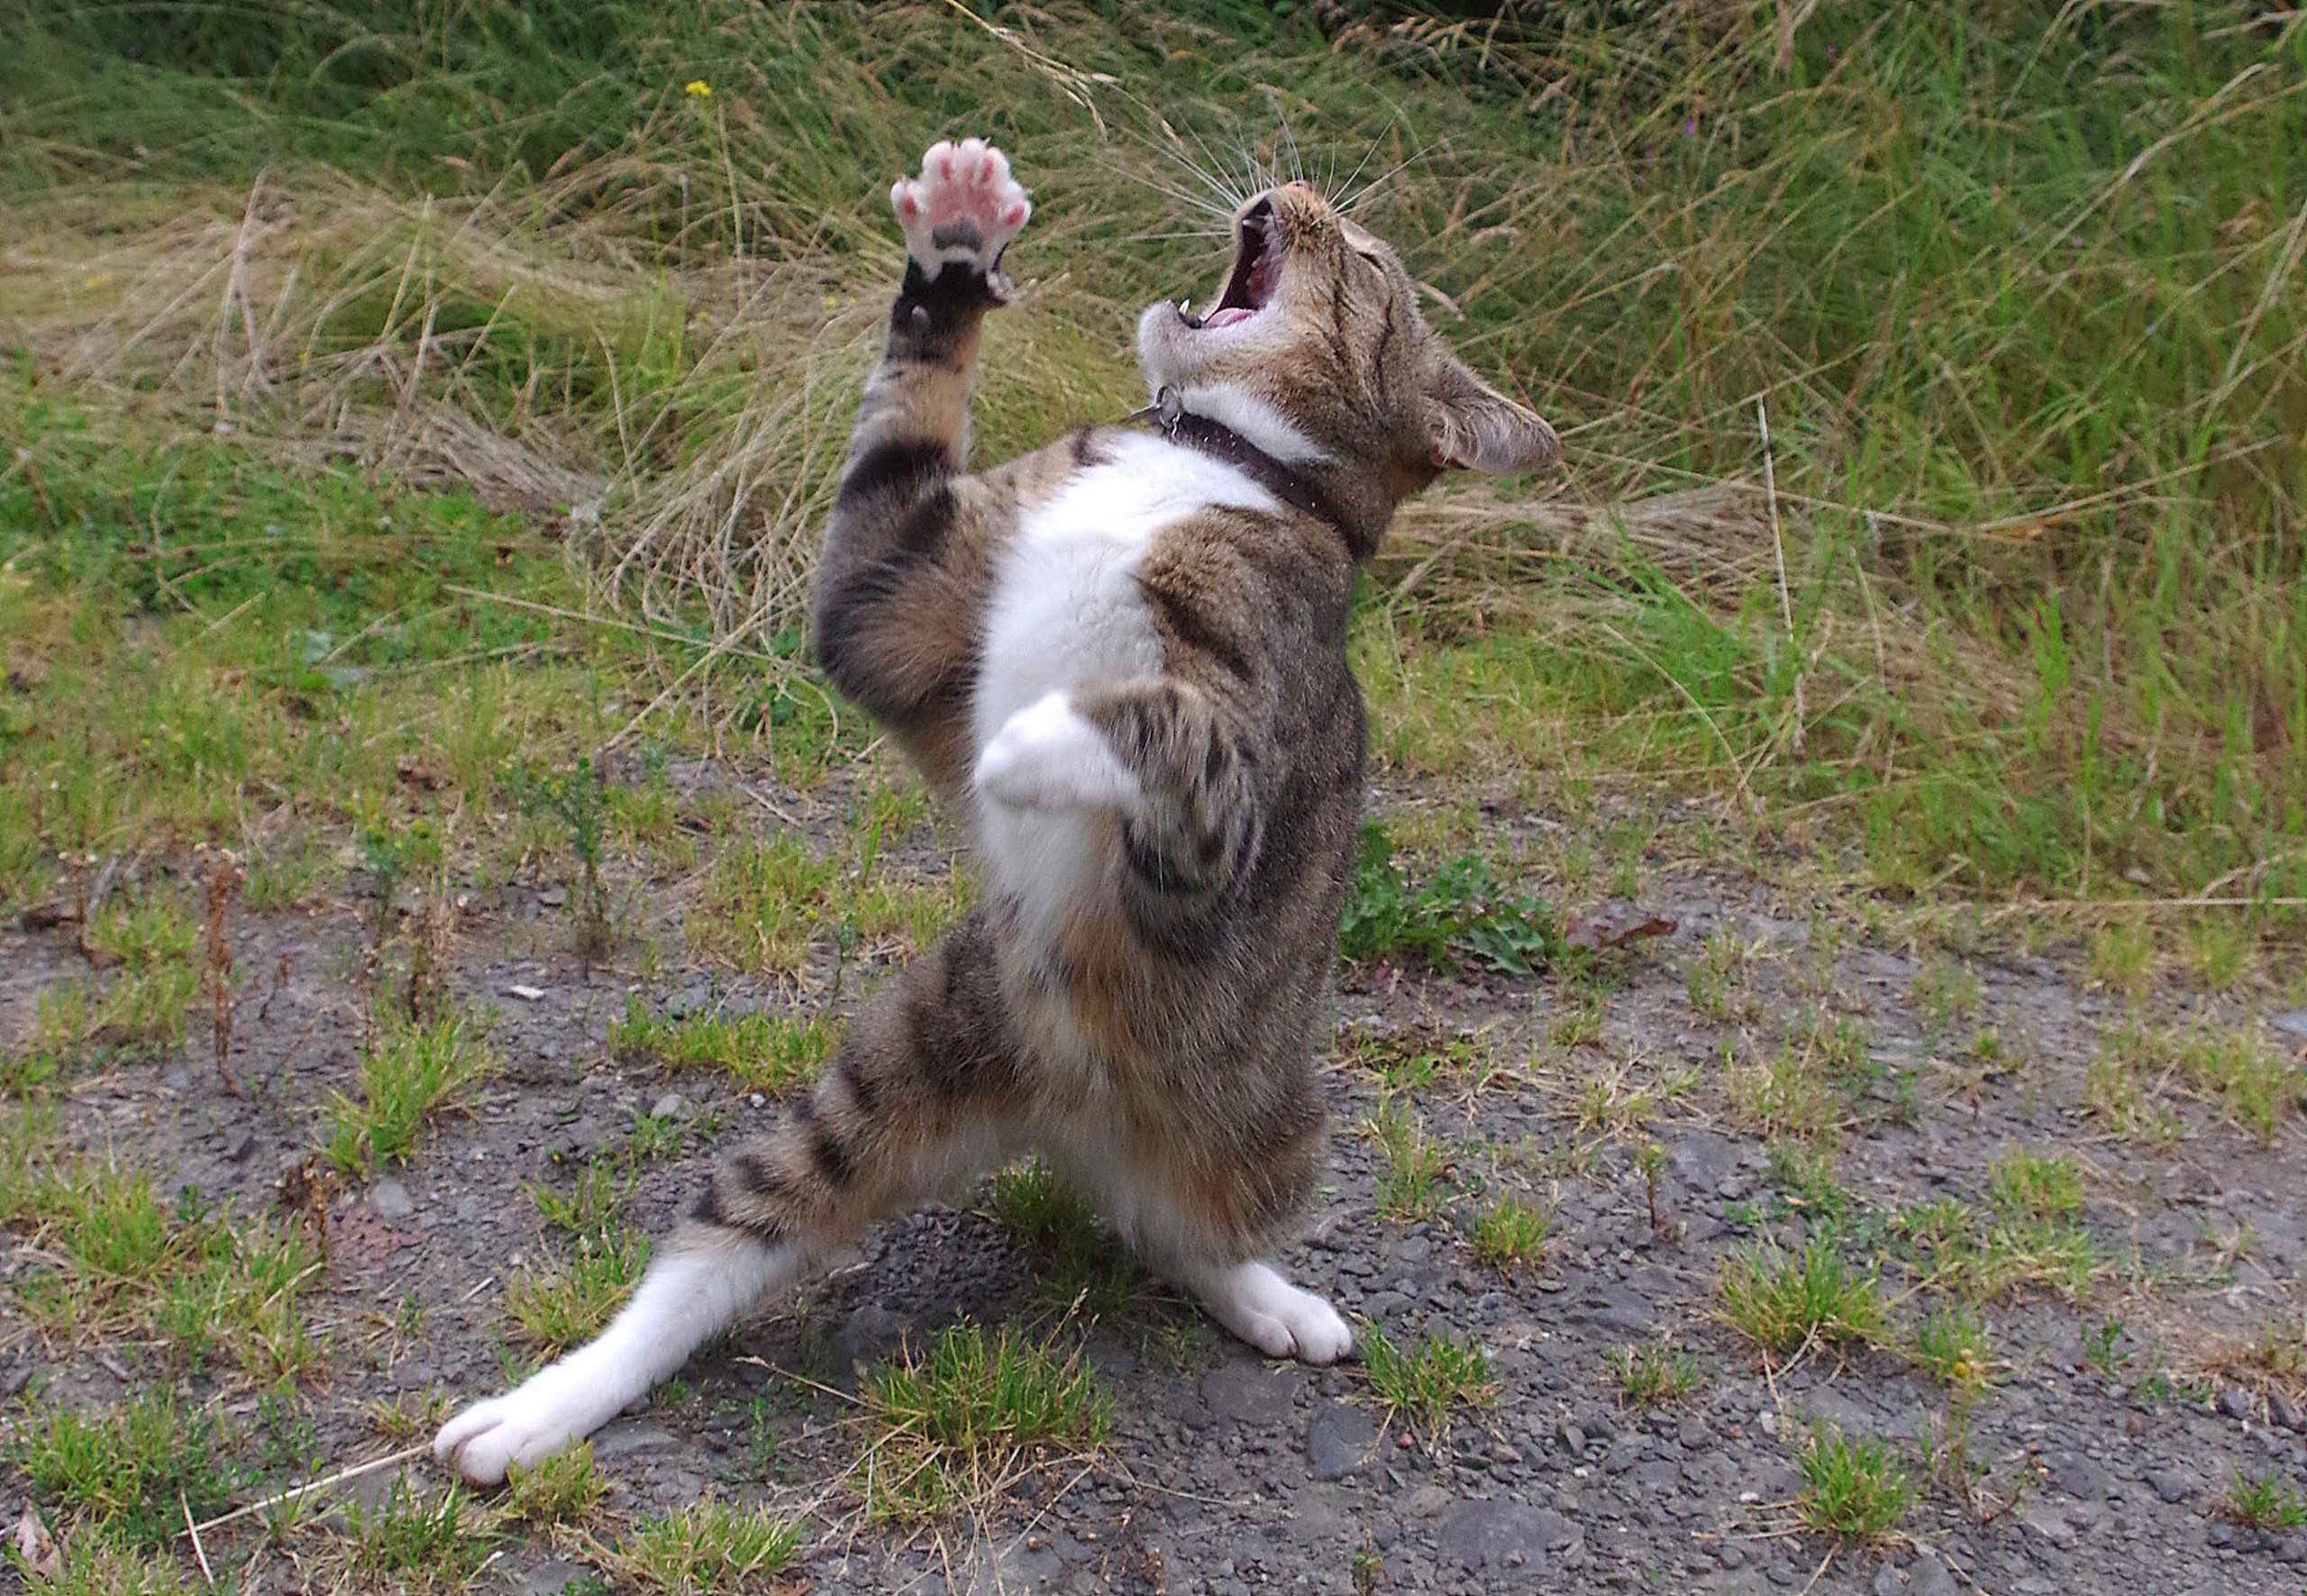 Fotografija 'Overdramatic cat' fotografa Iaina McConnella snimljena u Walesu. 